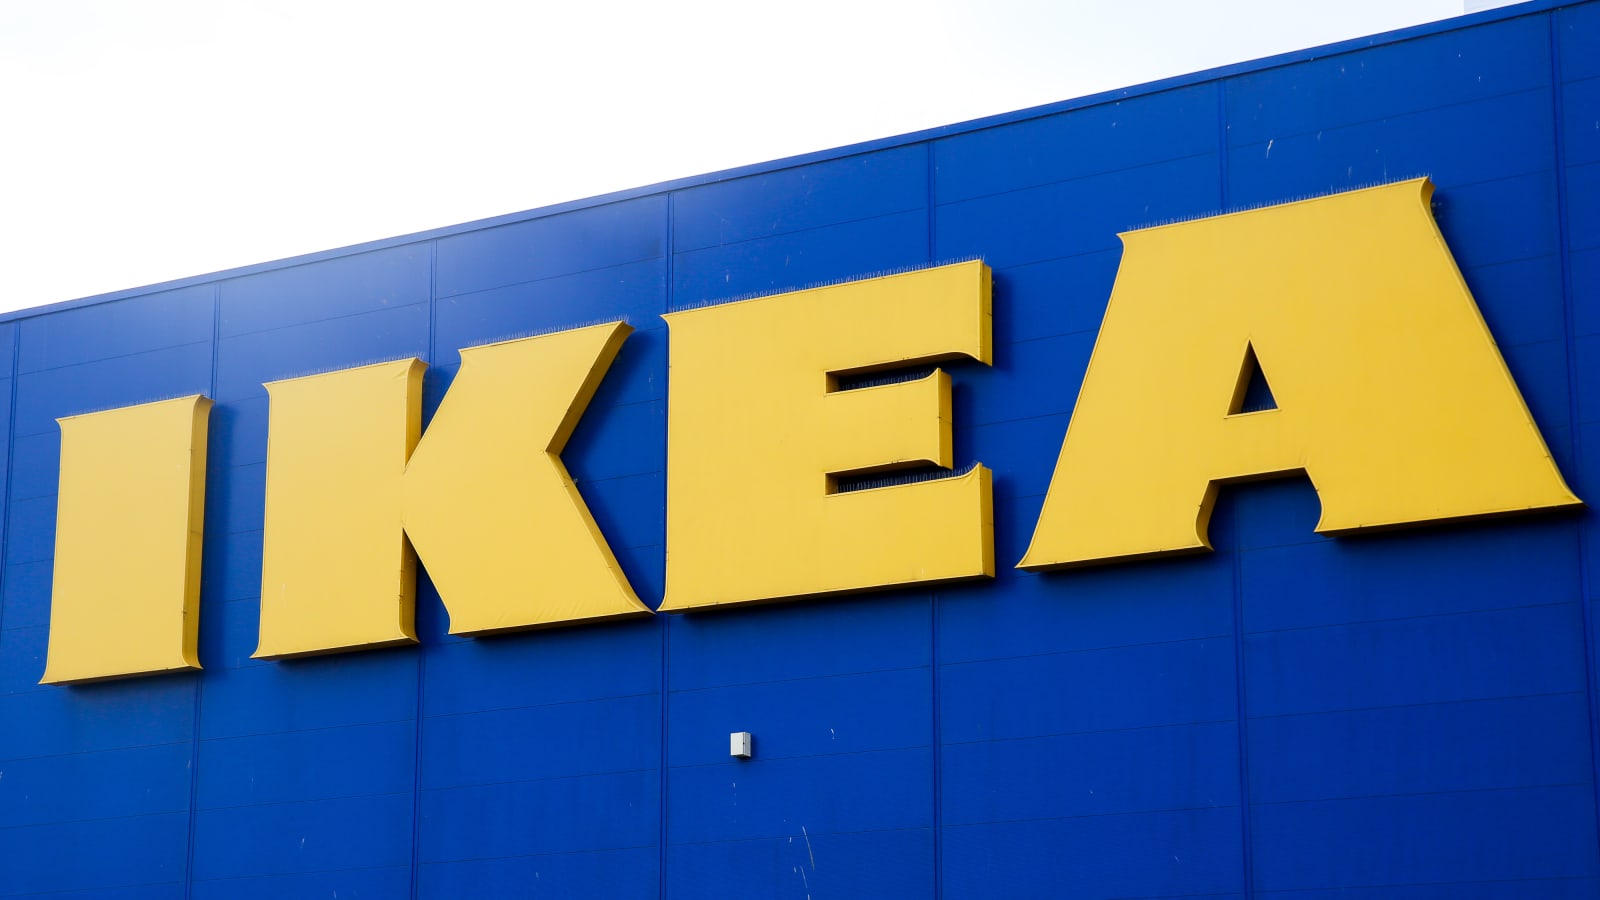 Psychology behind Ikea's huge success